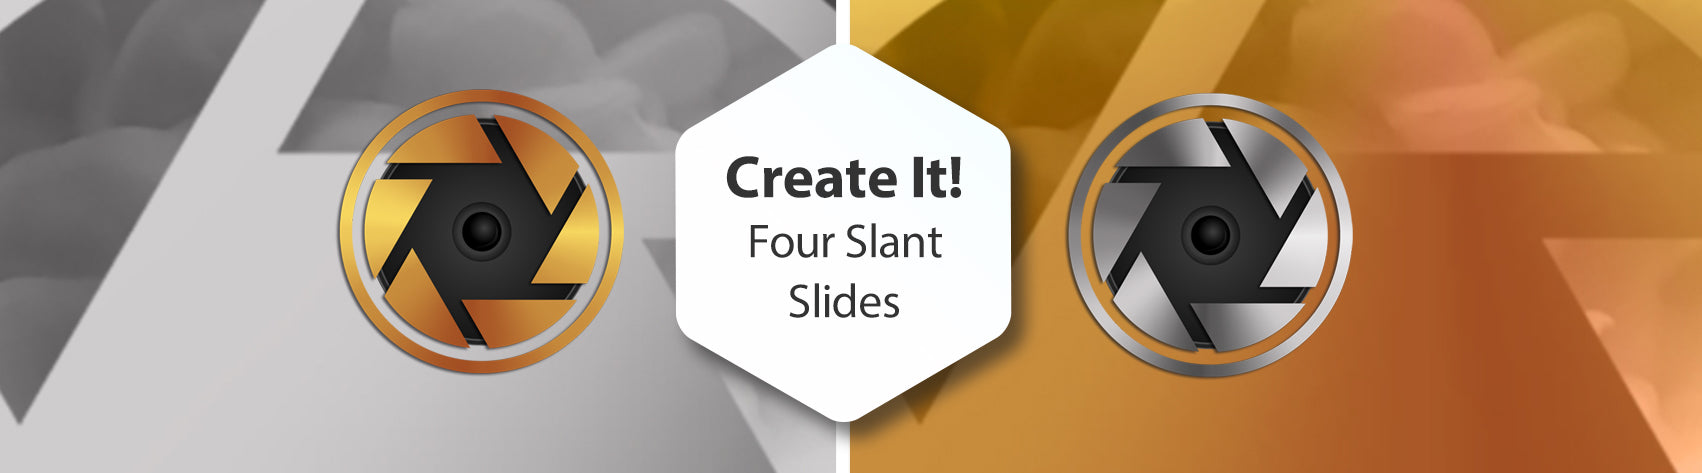 Create It! Four Slant Slides